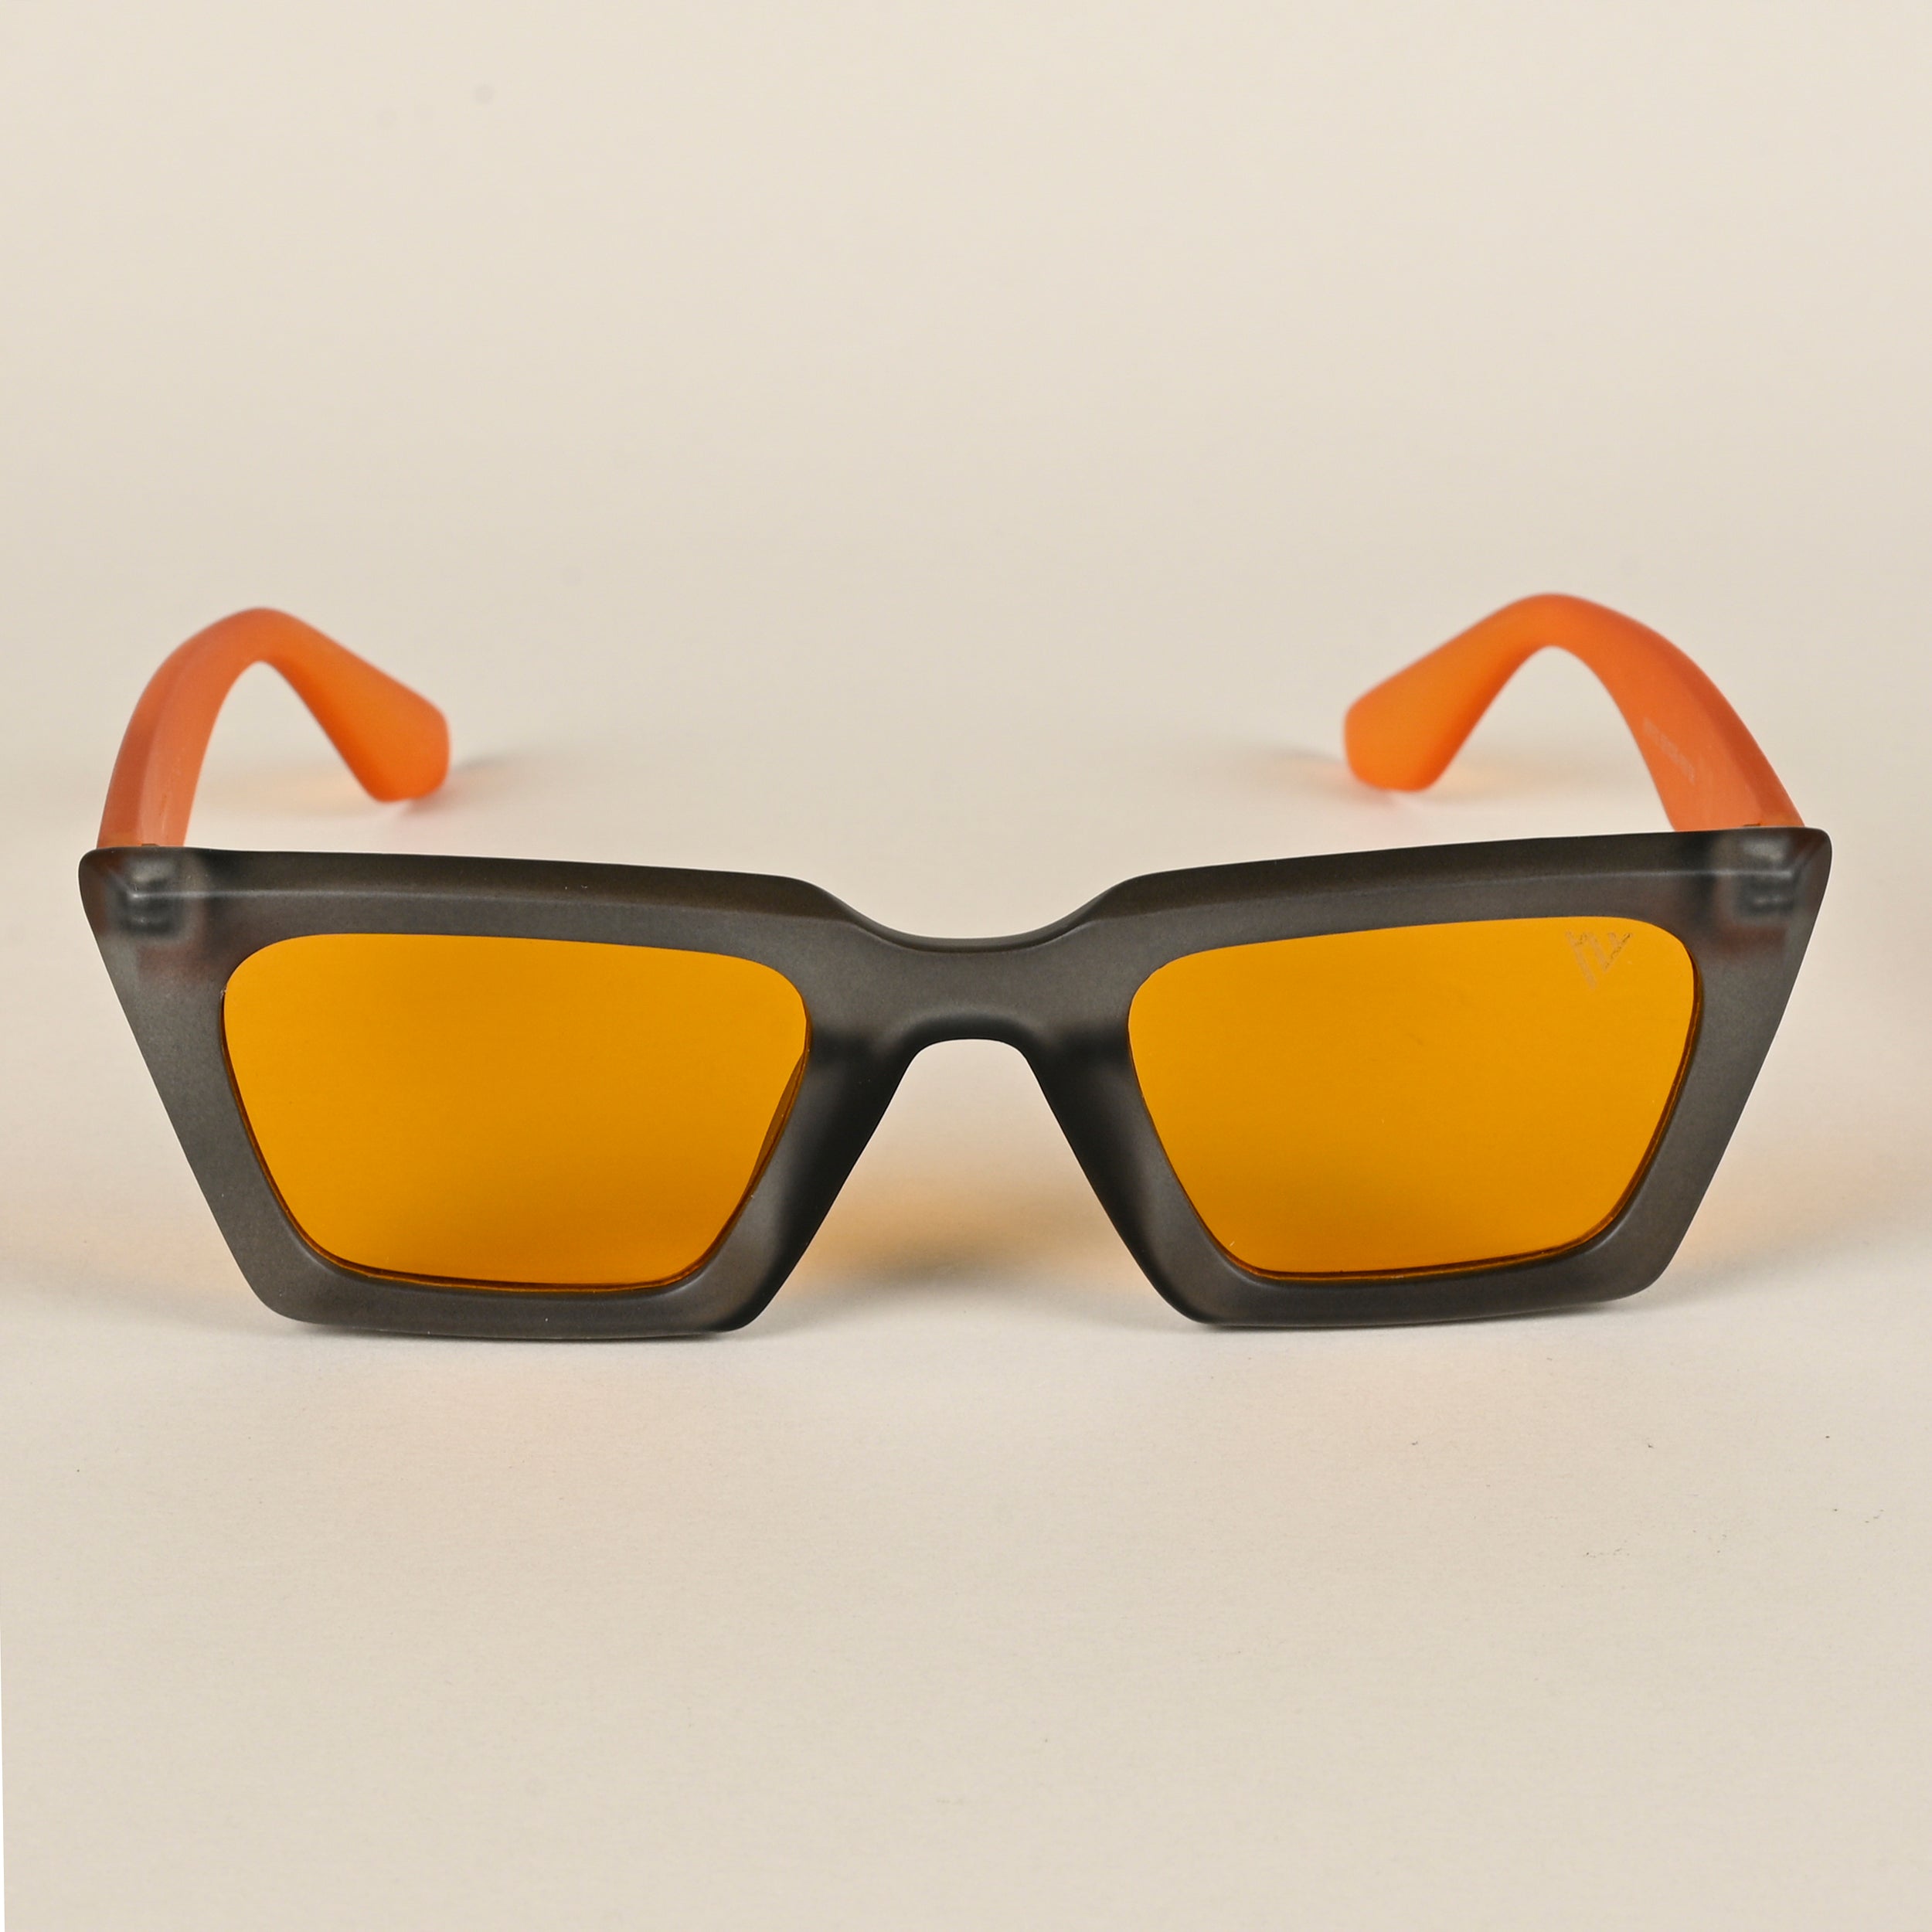 Voyage Orange Wayfarer Sunglasses for Men & Women (86632MG4123)